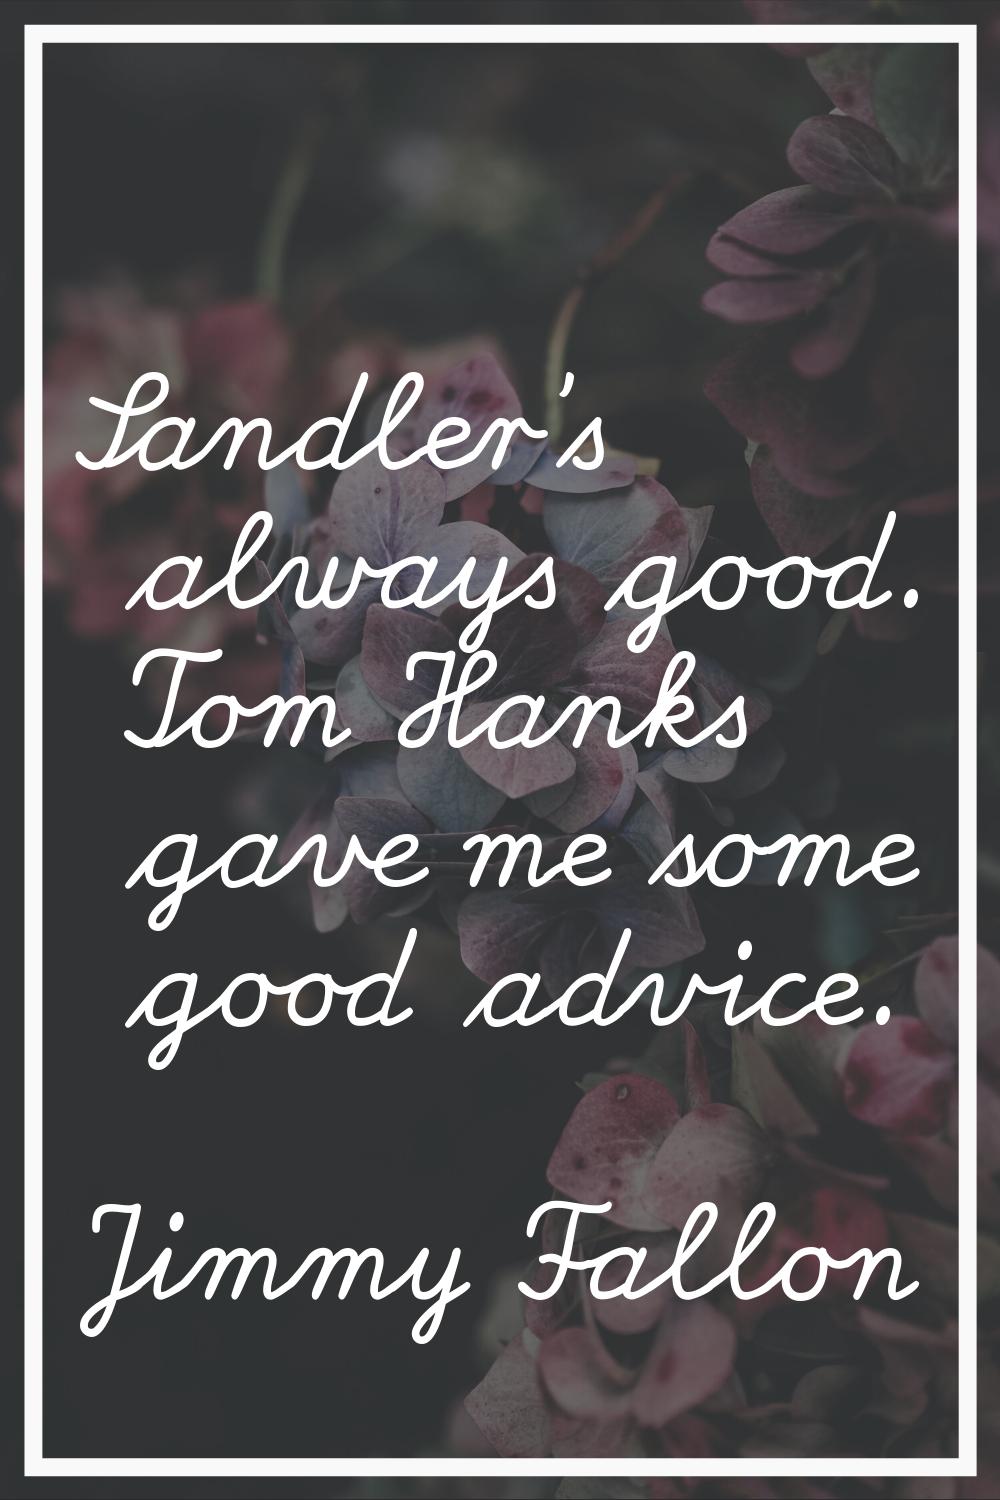 Sandler's always good. Tom Hanks gave me some good advice.